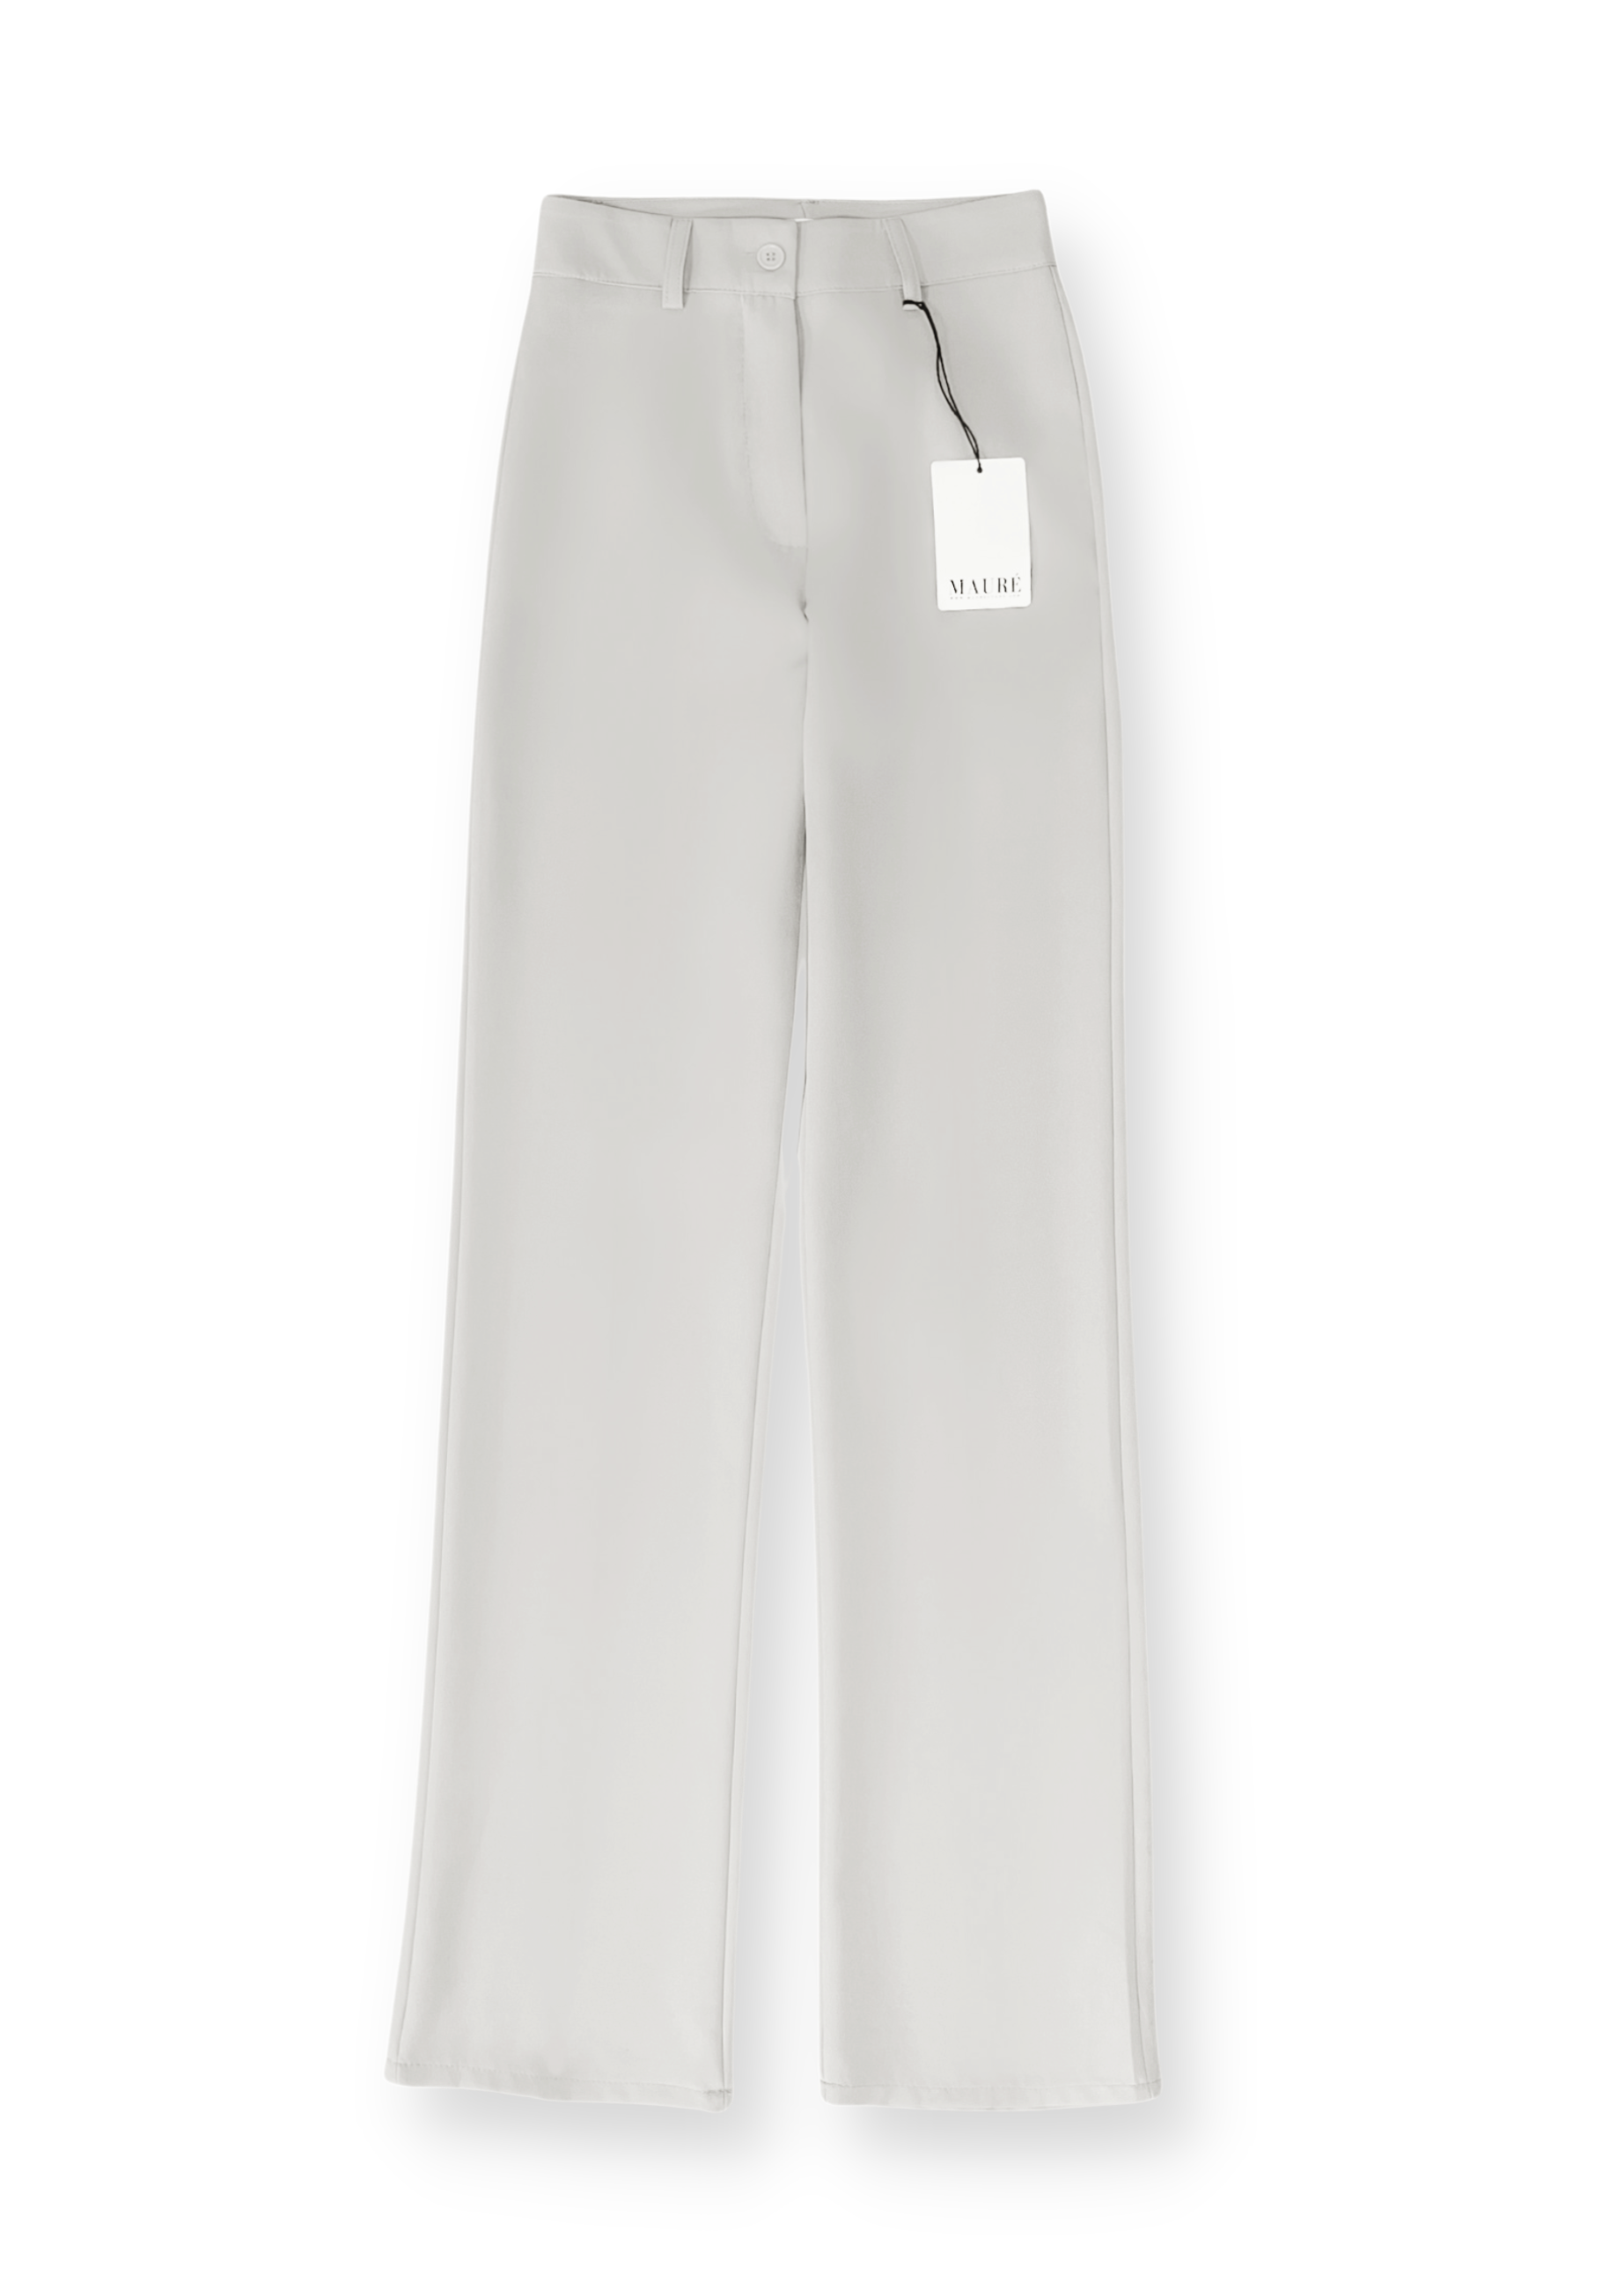 Straight leg pants classic creamy gray (TALL)